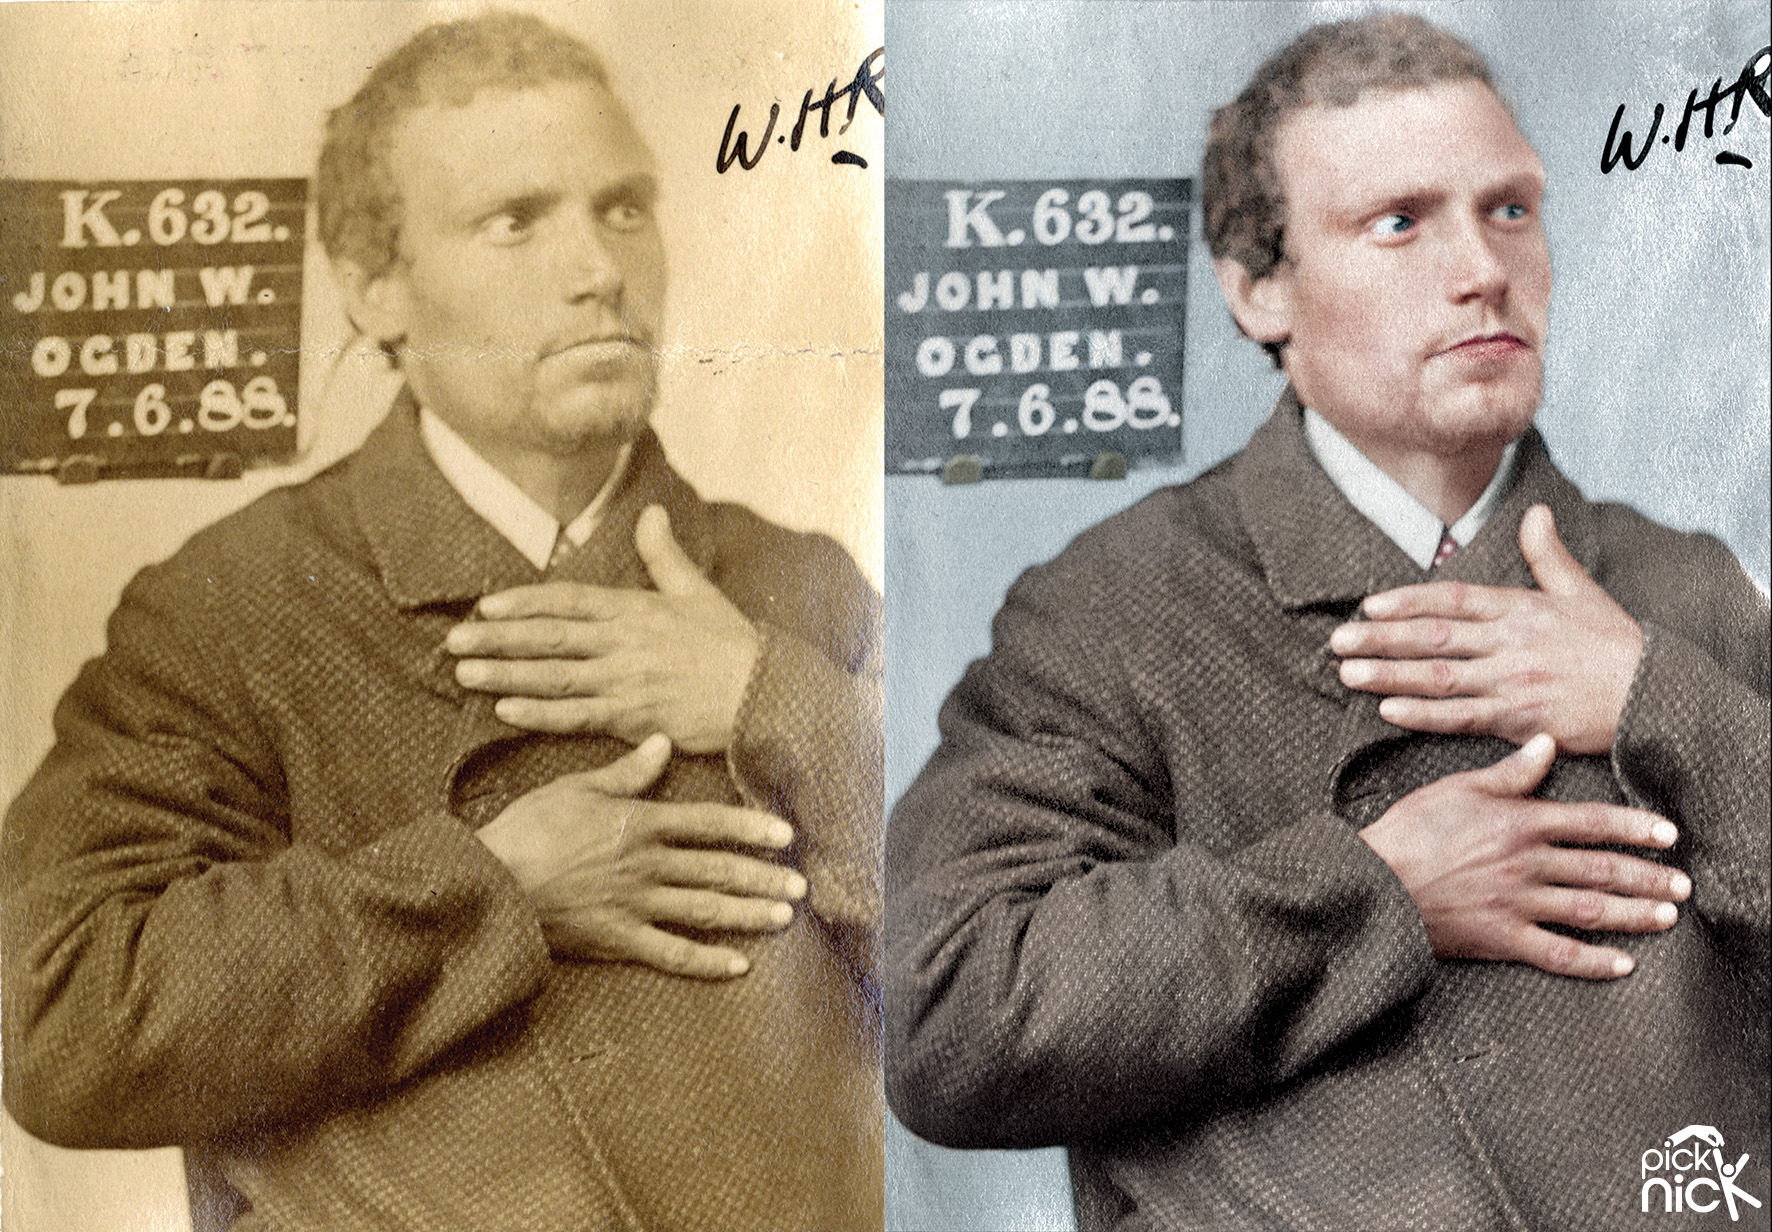 John Wm. Ogden - Colourised prisoner photos showing before and after